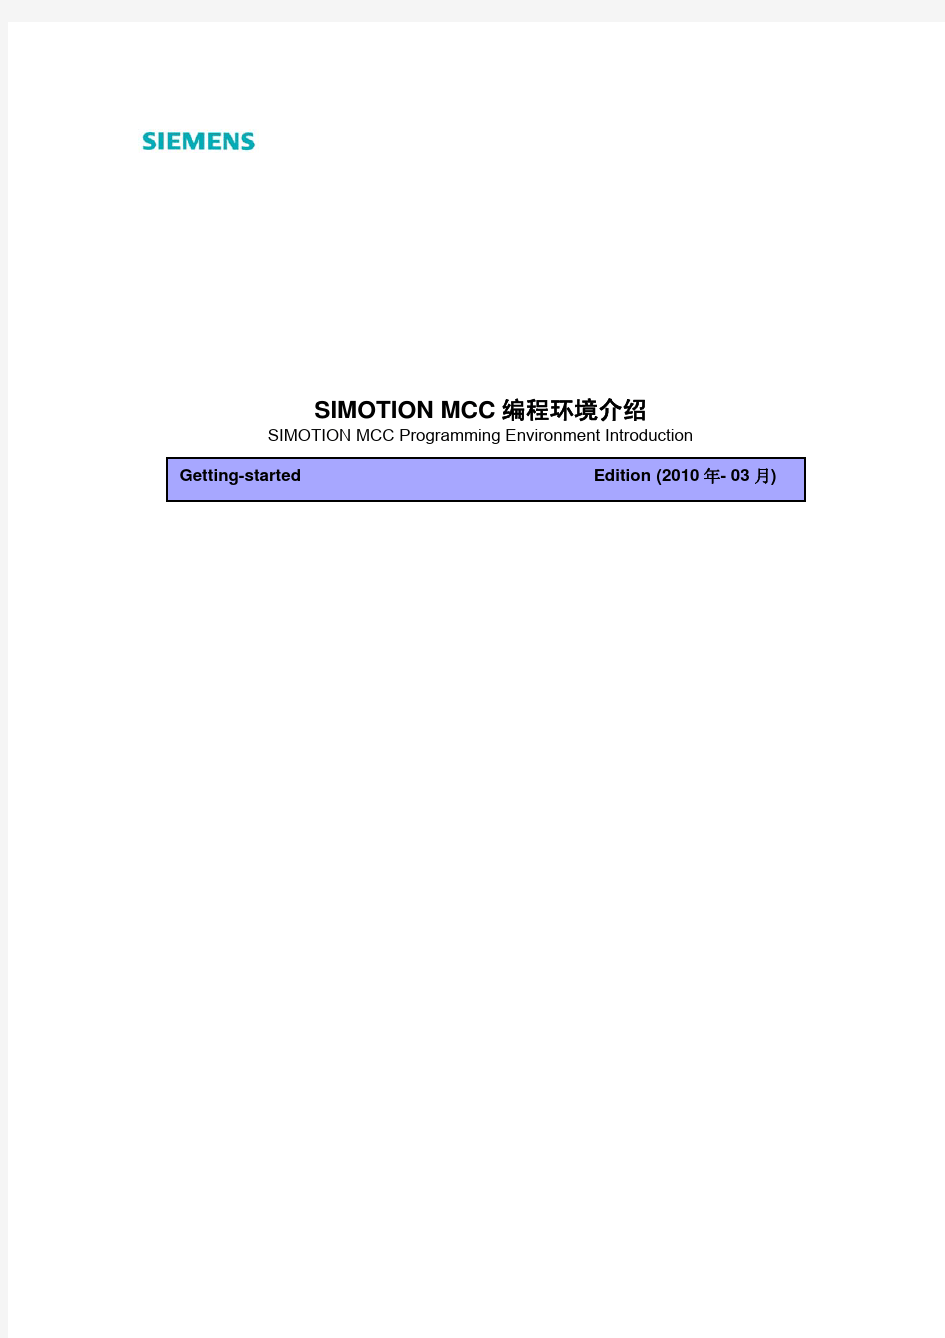 SIMOTION MCC编程环境介绍